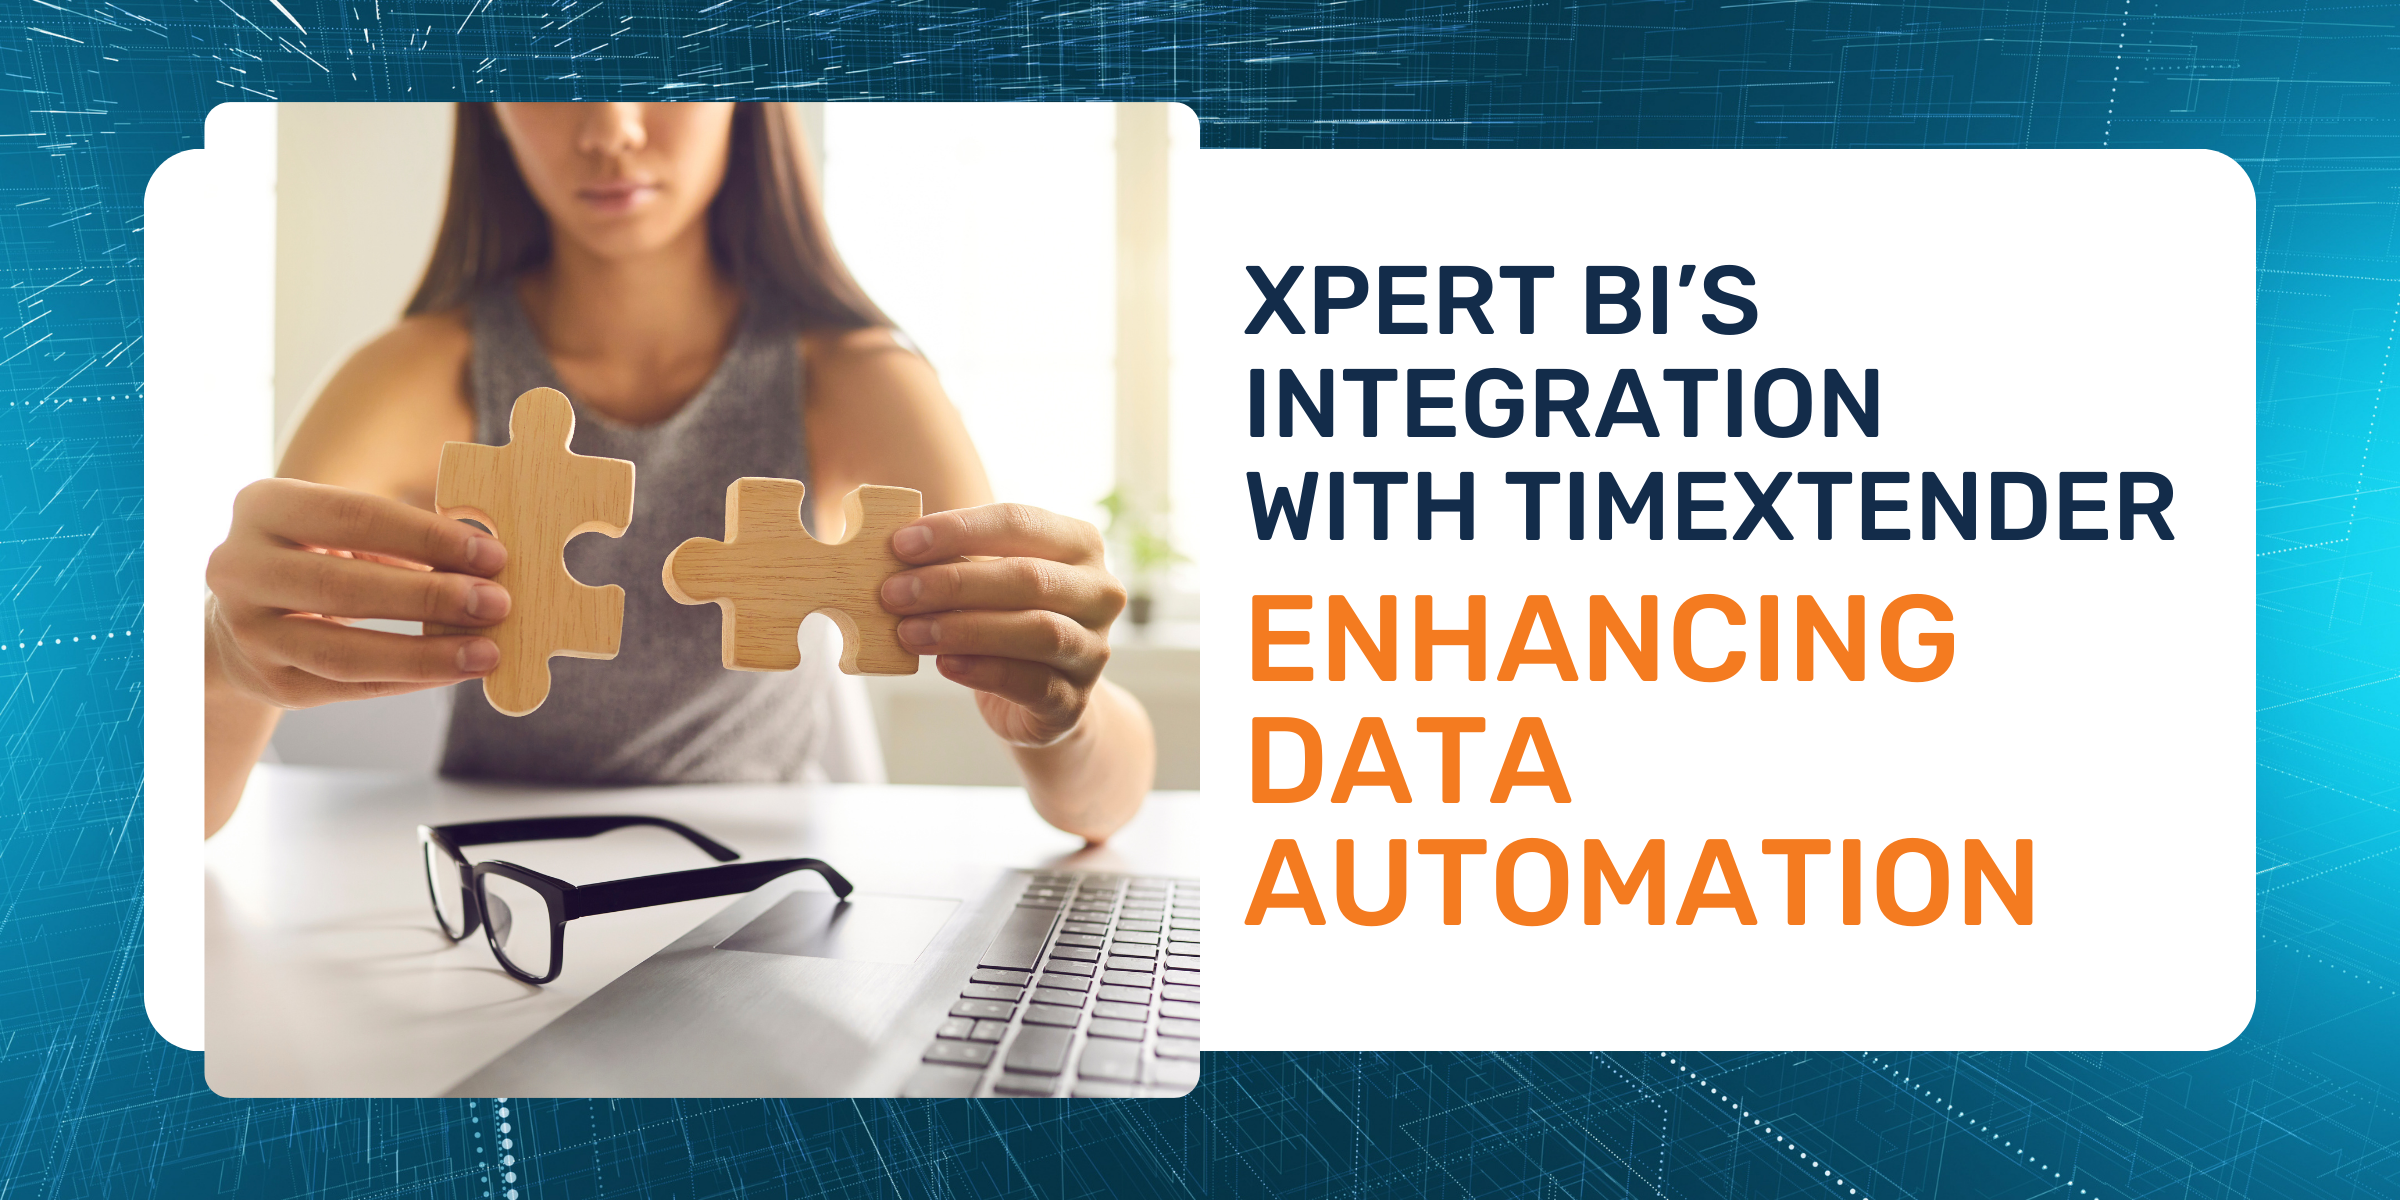 Xpert BI’s Integration with TimeXtender: Enhancing Data Automation